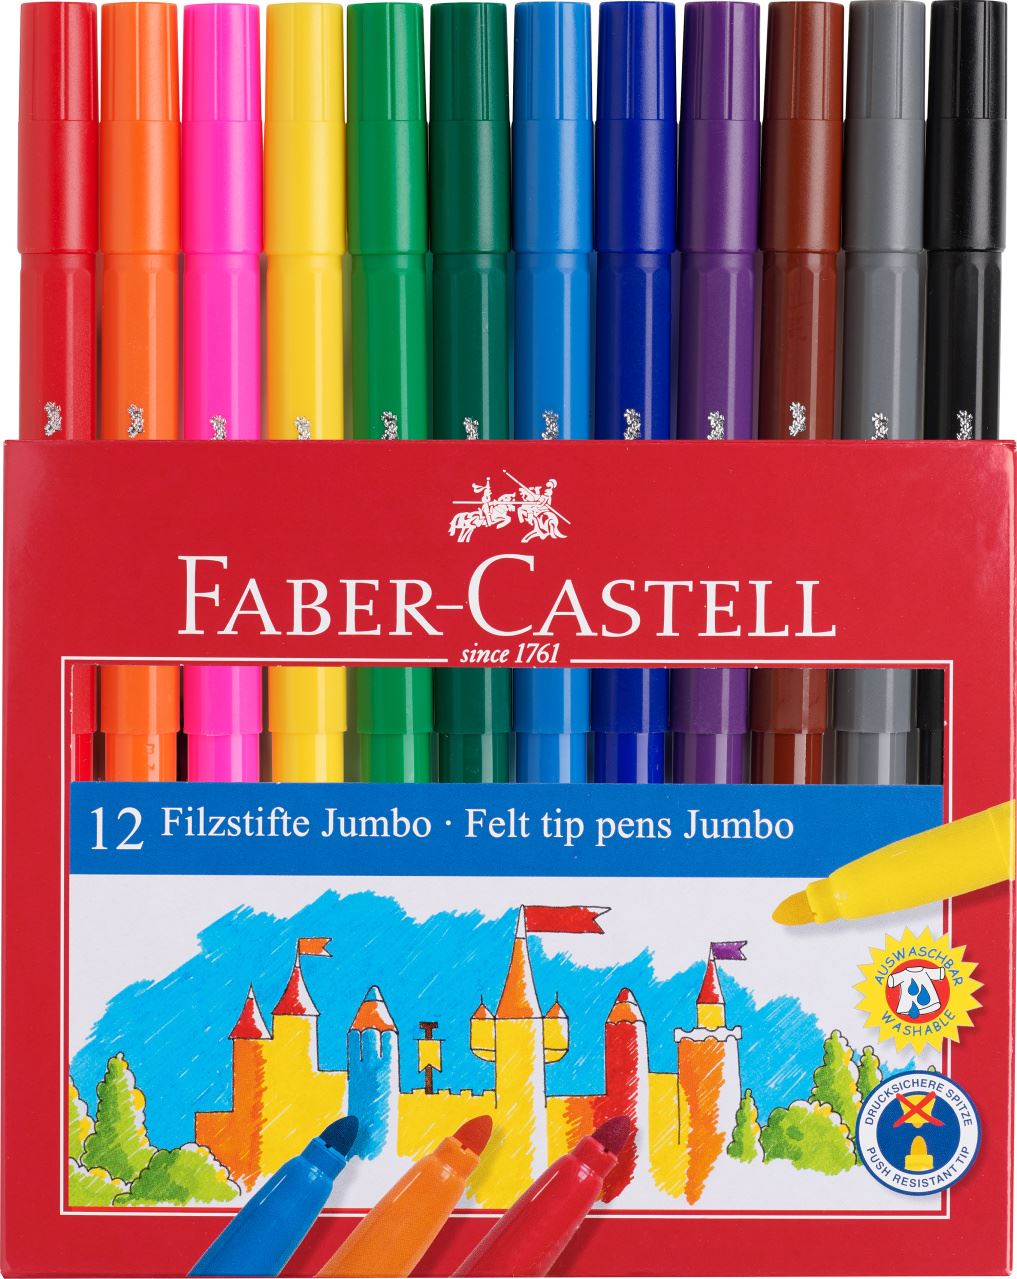 Faber-Castell - Astuccio in cartone 12 pennarelli Castello Jumbo